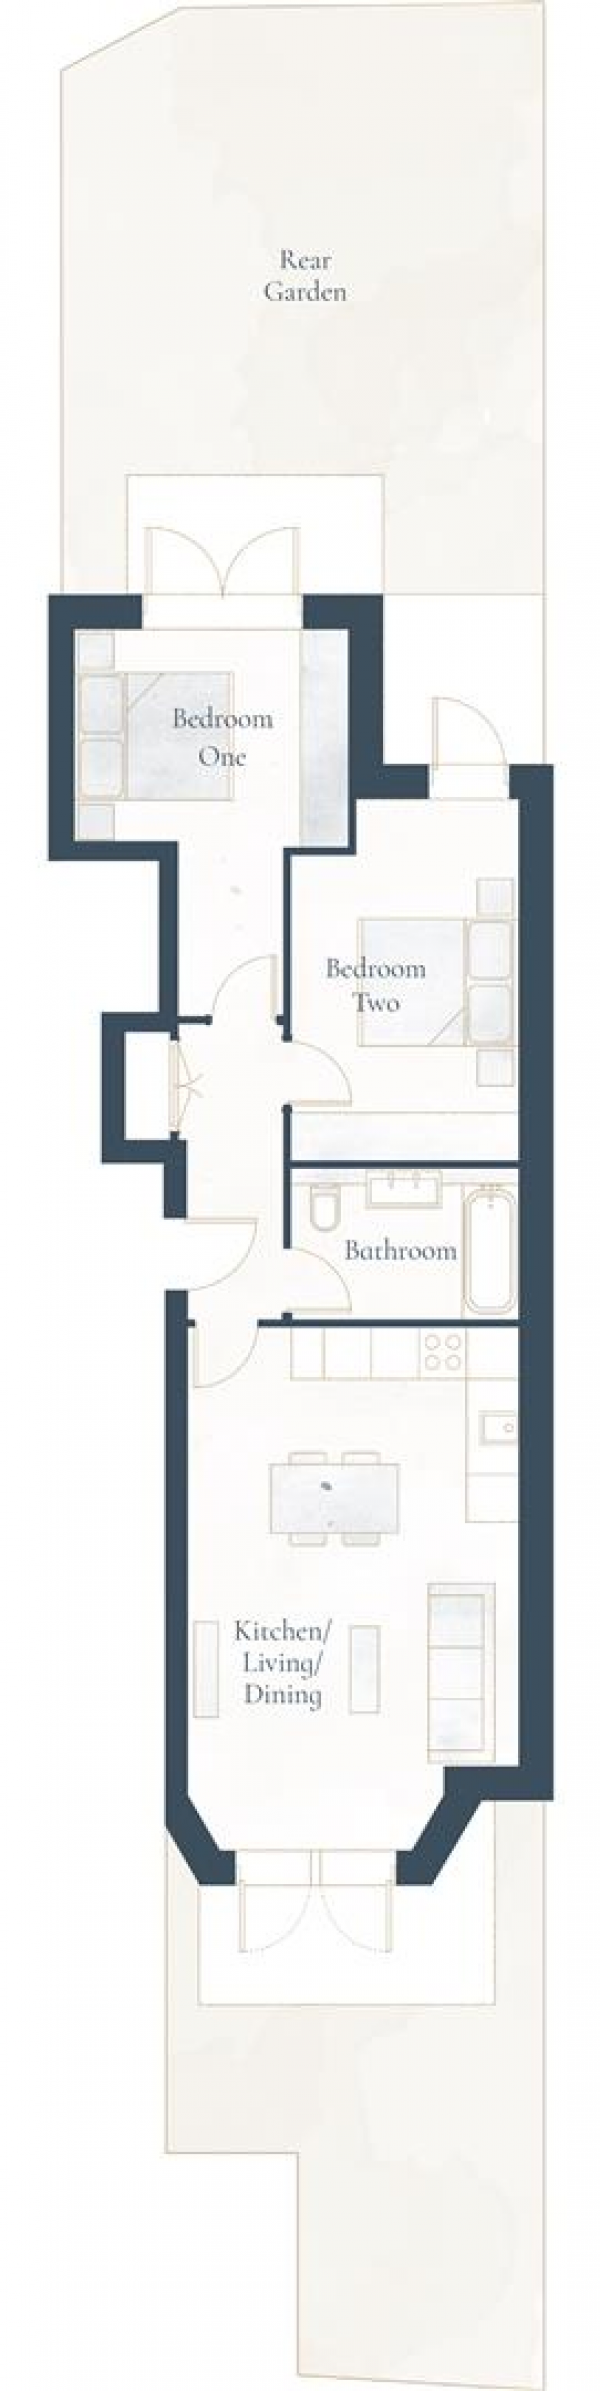 Floor Plan Image for 2 Bedroom Flat for Sale in The Rosemont, 9 Rosemont Road, London